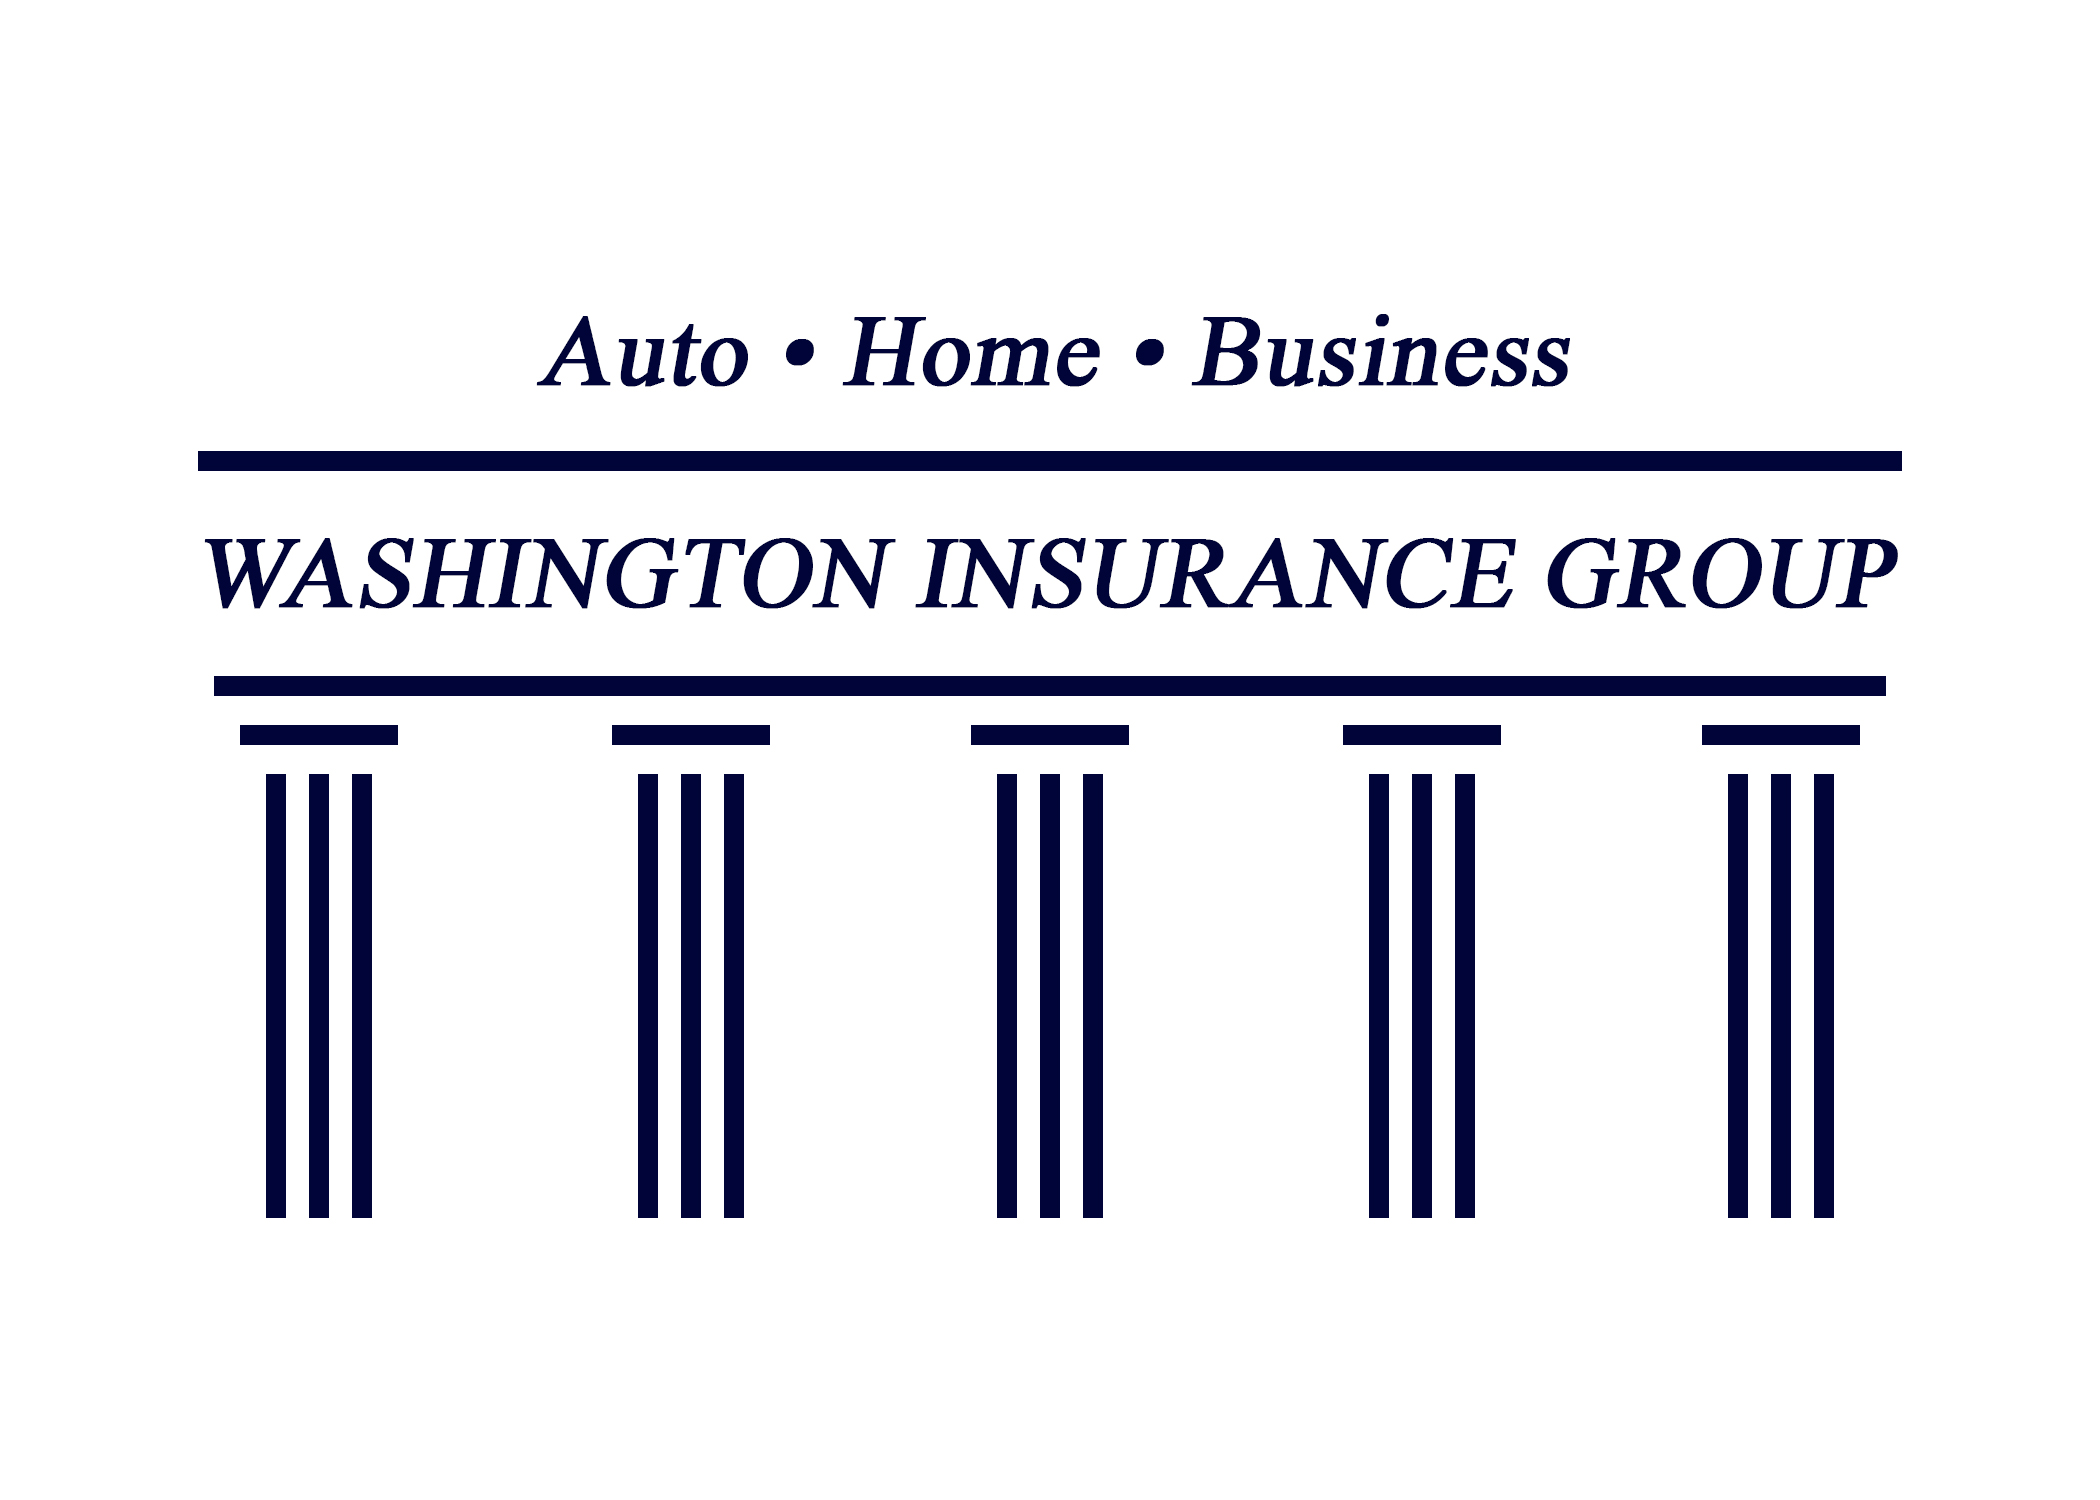 Washington Insurance Group